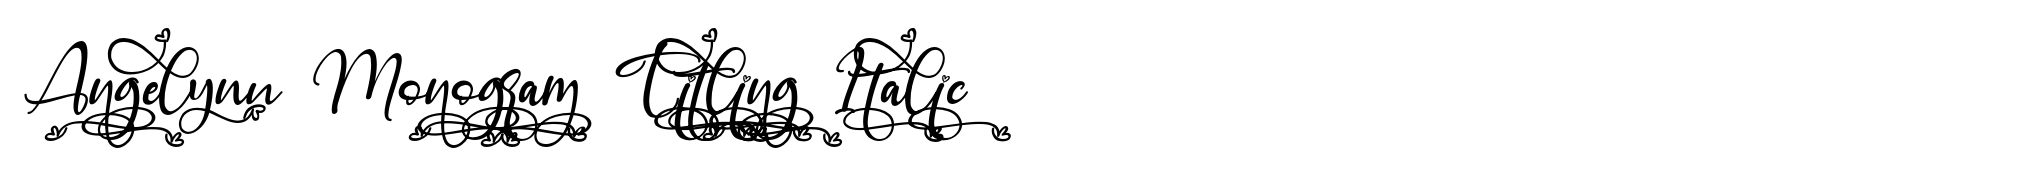 Angelynn Monogram Titling Italic image